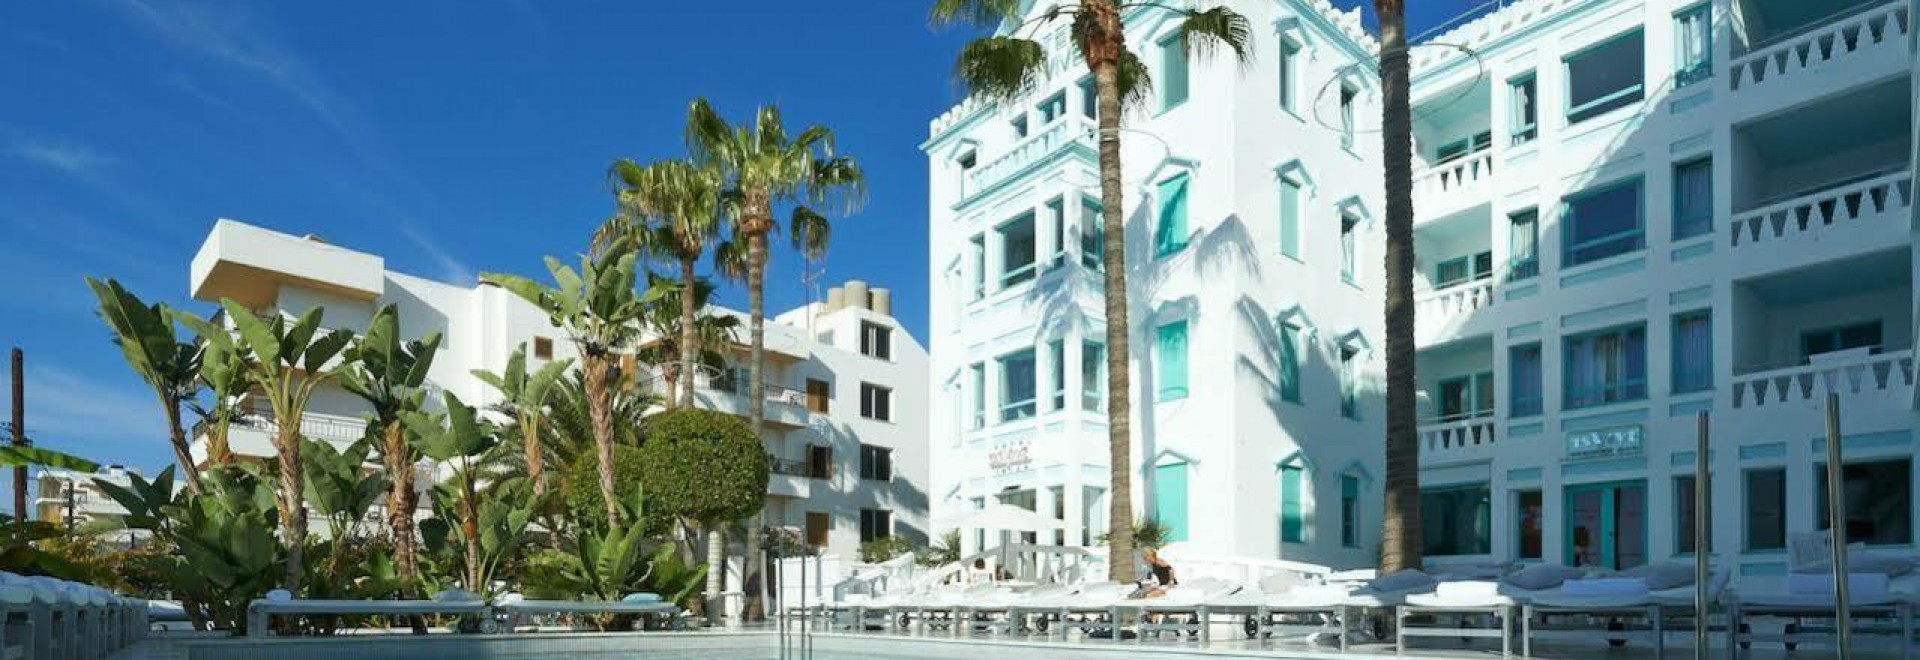 MIM Ibiza Boutique Hotel - Book. Travel. Play.